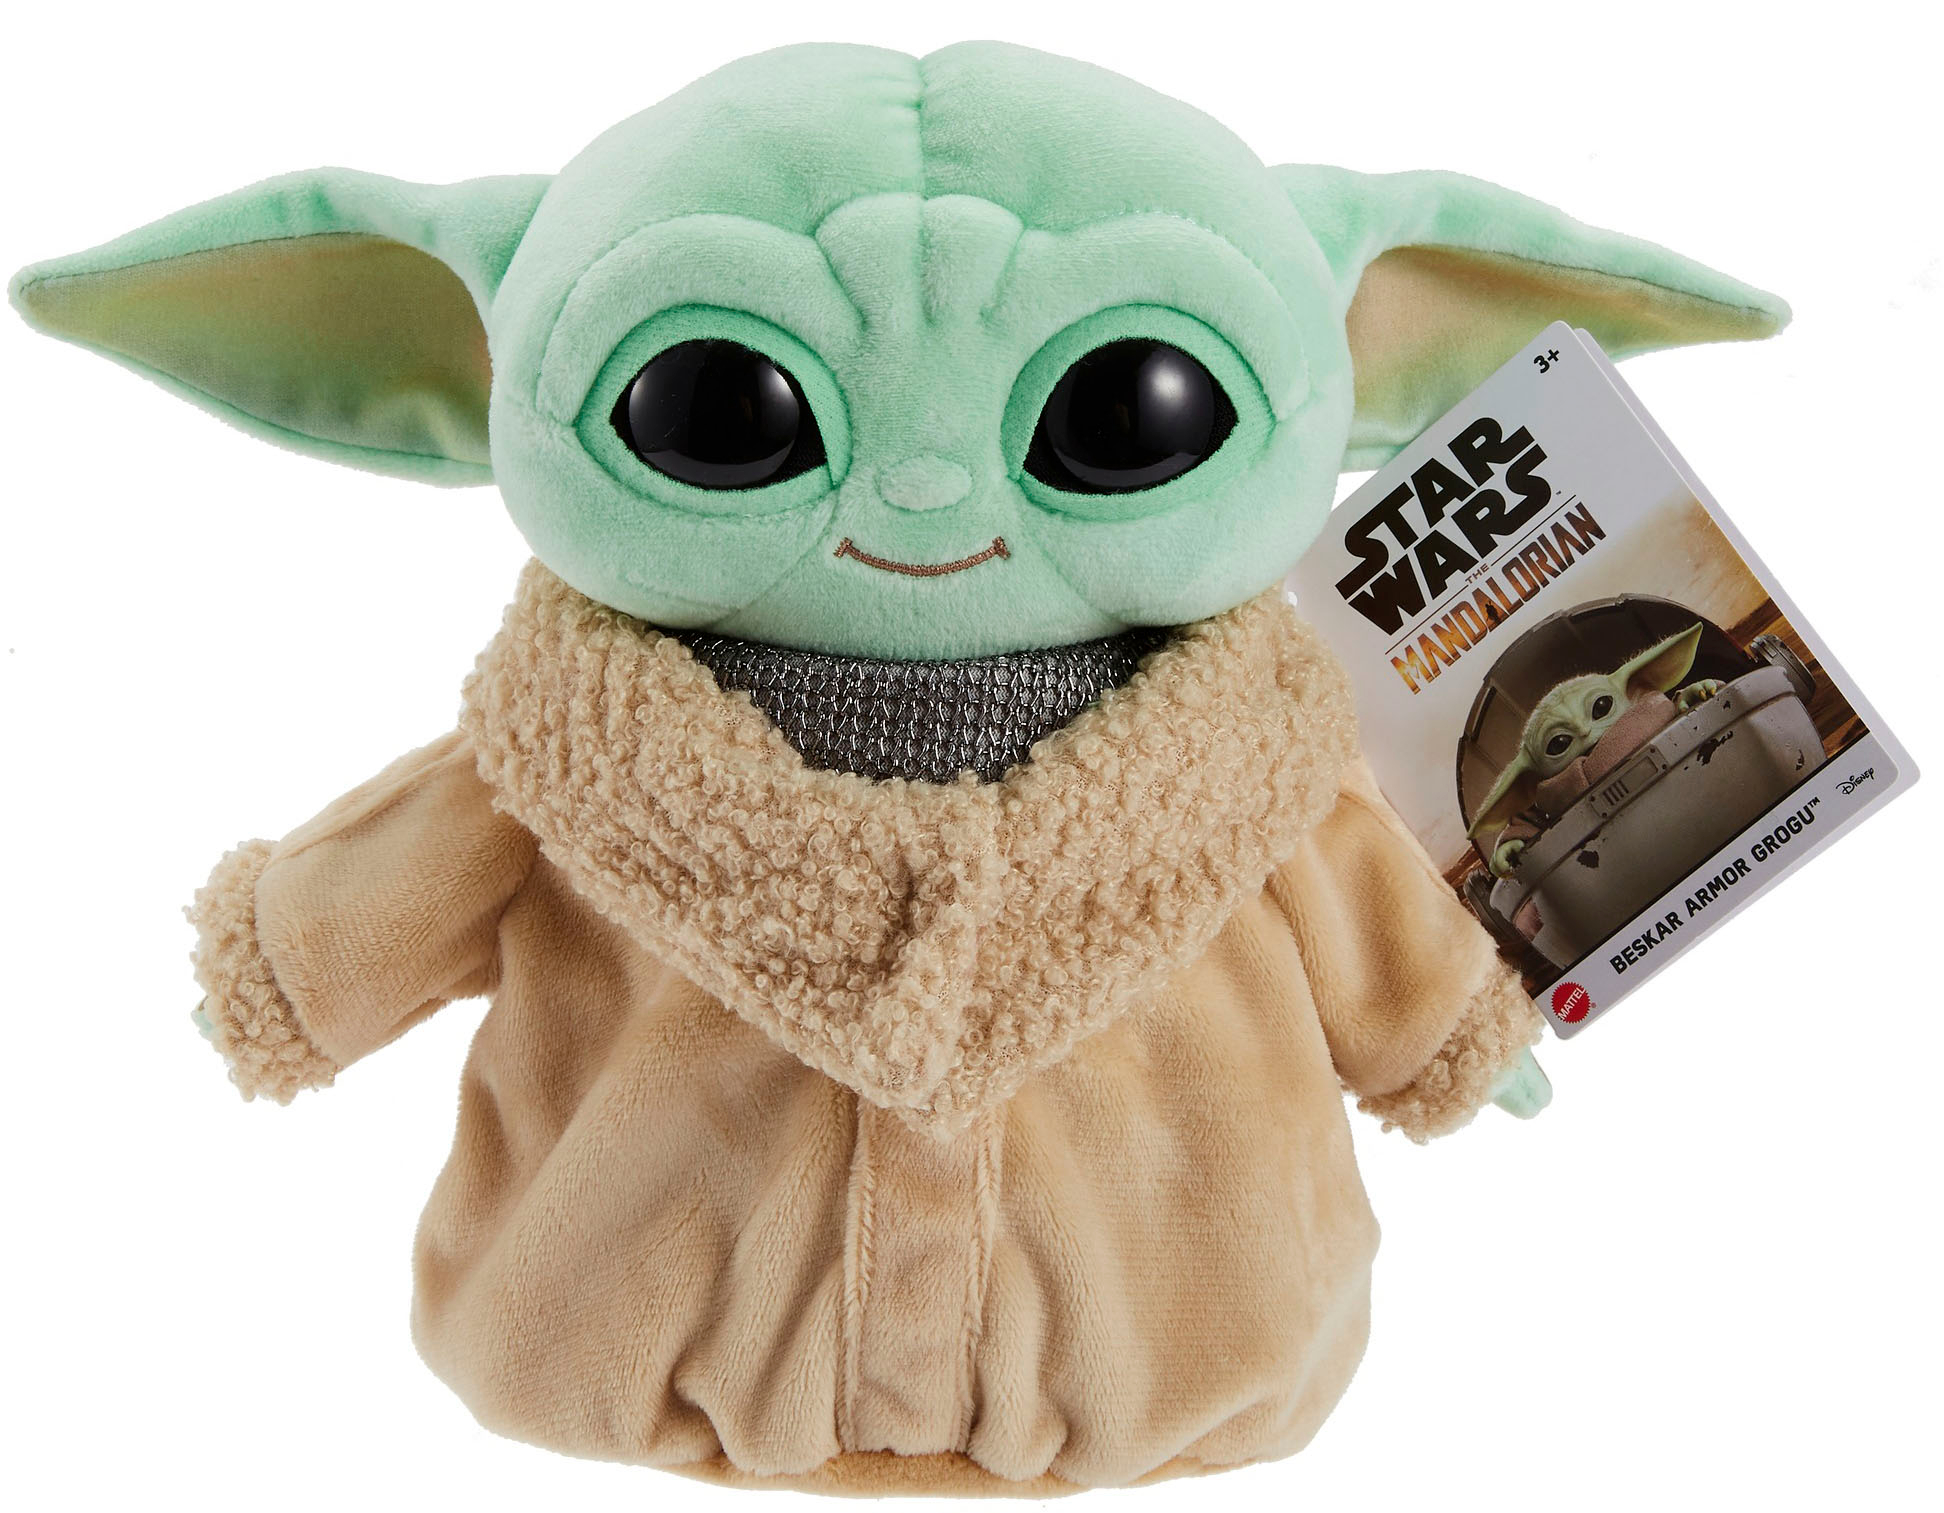  Mattel Star Wars Plush Toys, Grogu Soft Doll from The